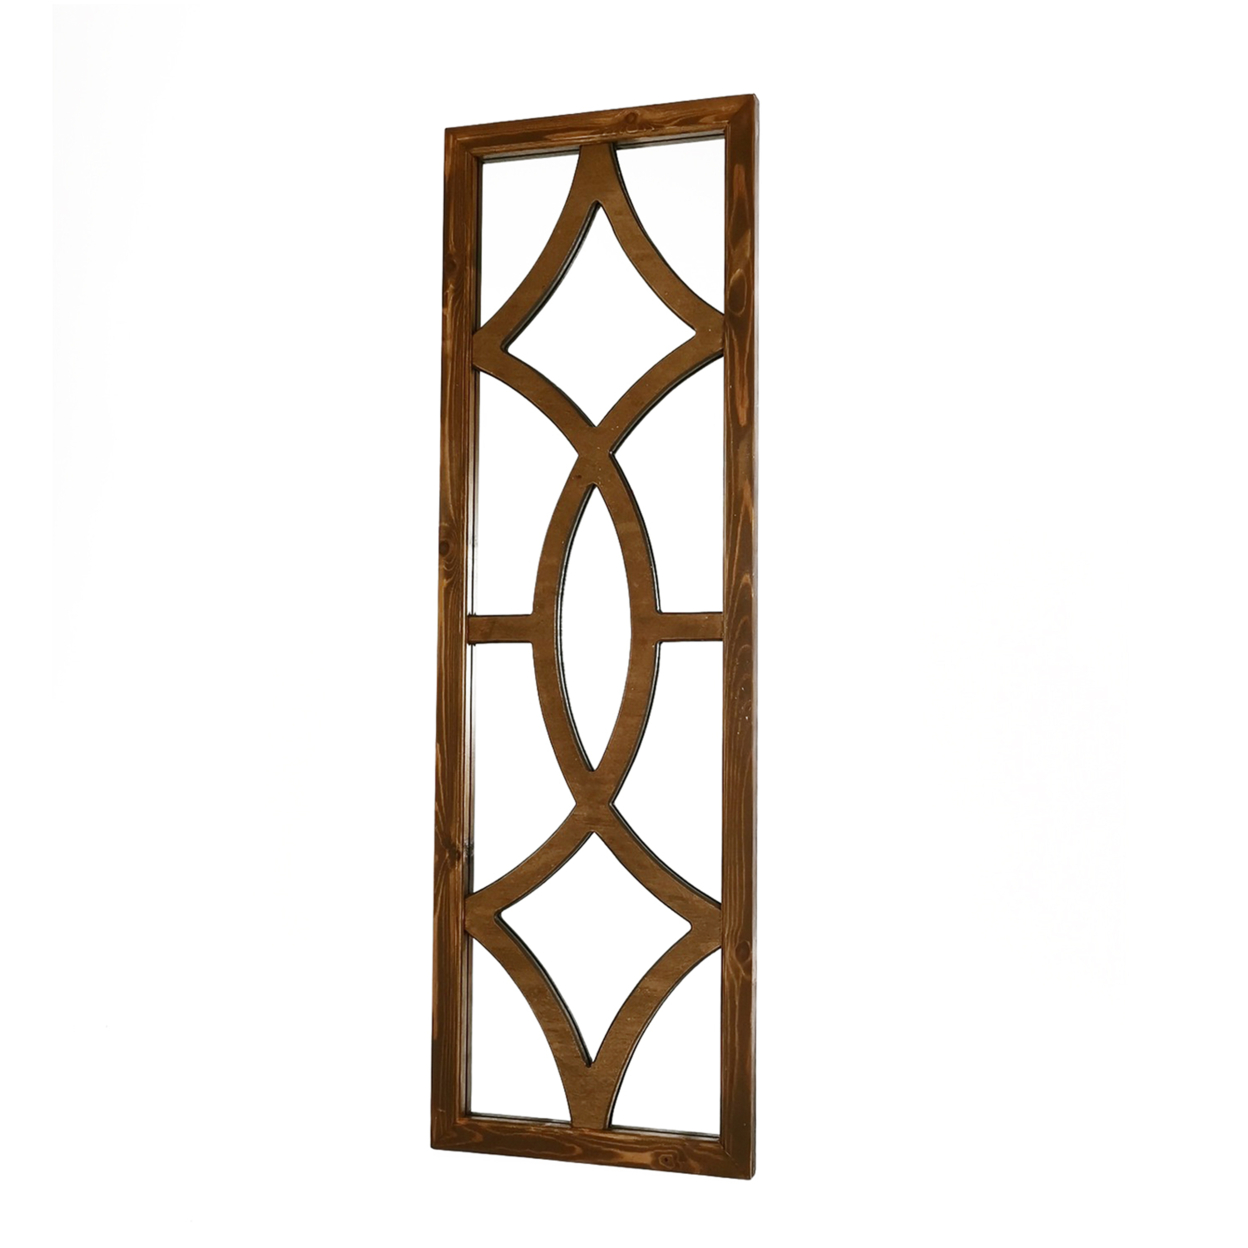 Wooden Frame Mirror With Open Lattice Pattern Front, Brown- Saltoro Sherpi